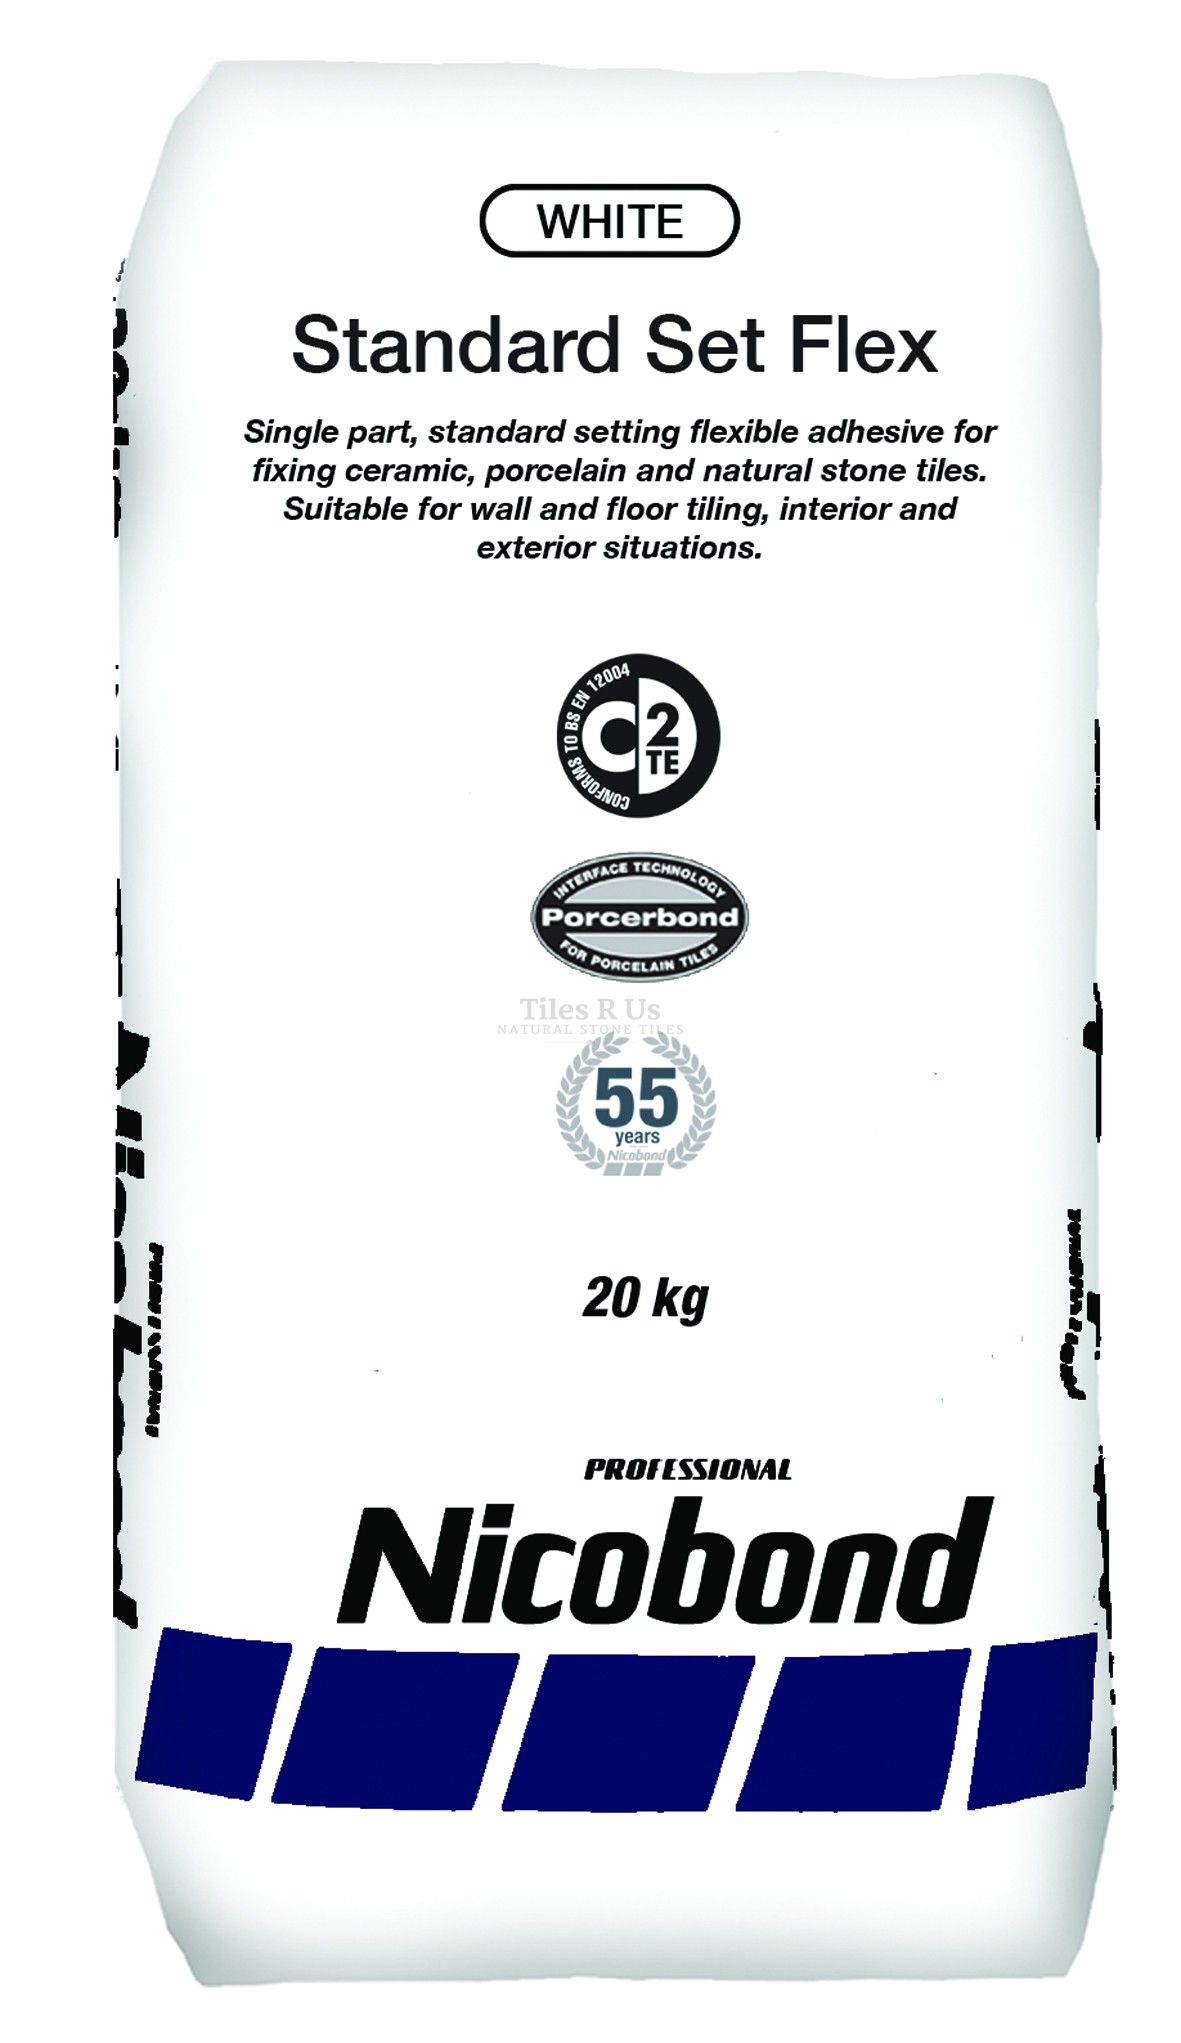 Nicobond Flex Standard Set Tile Adhesive